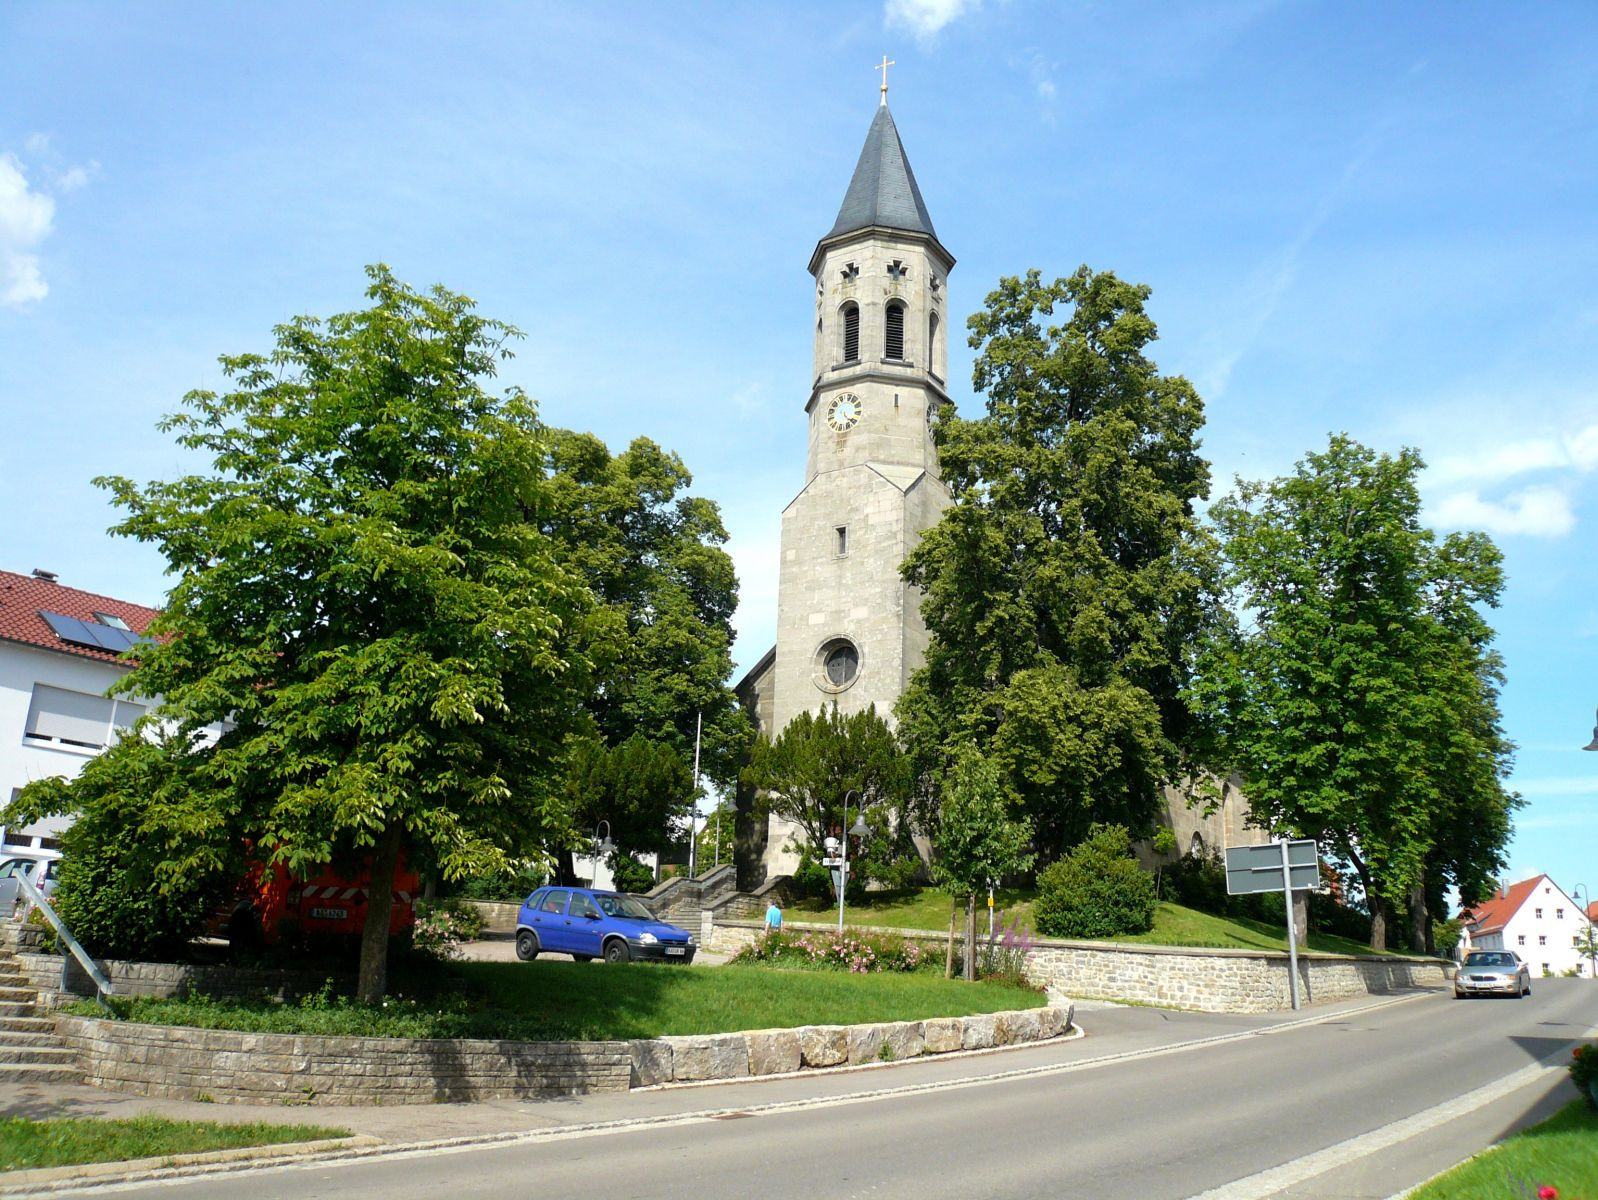 St. Martinuskirche